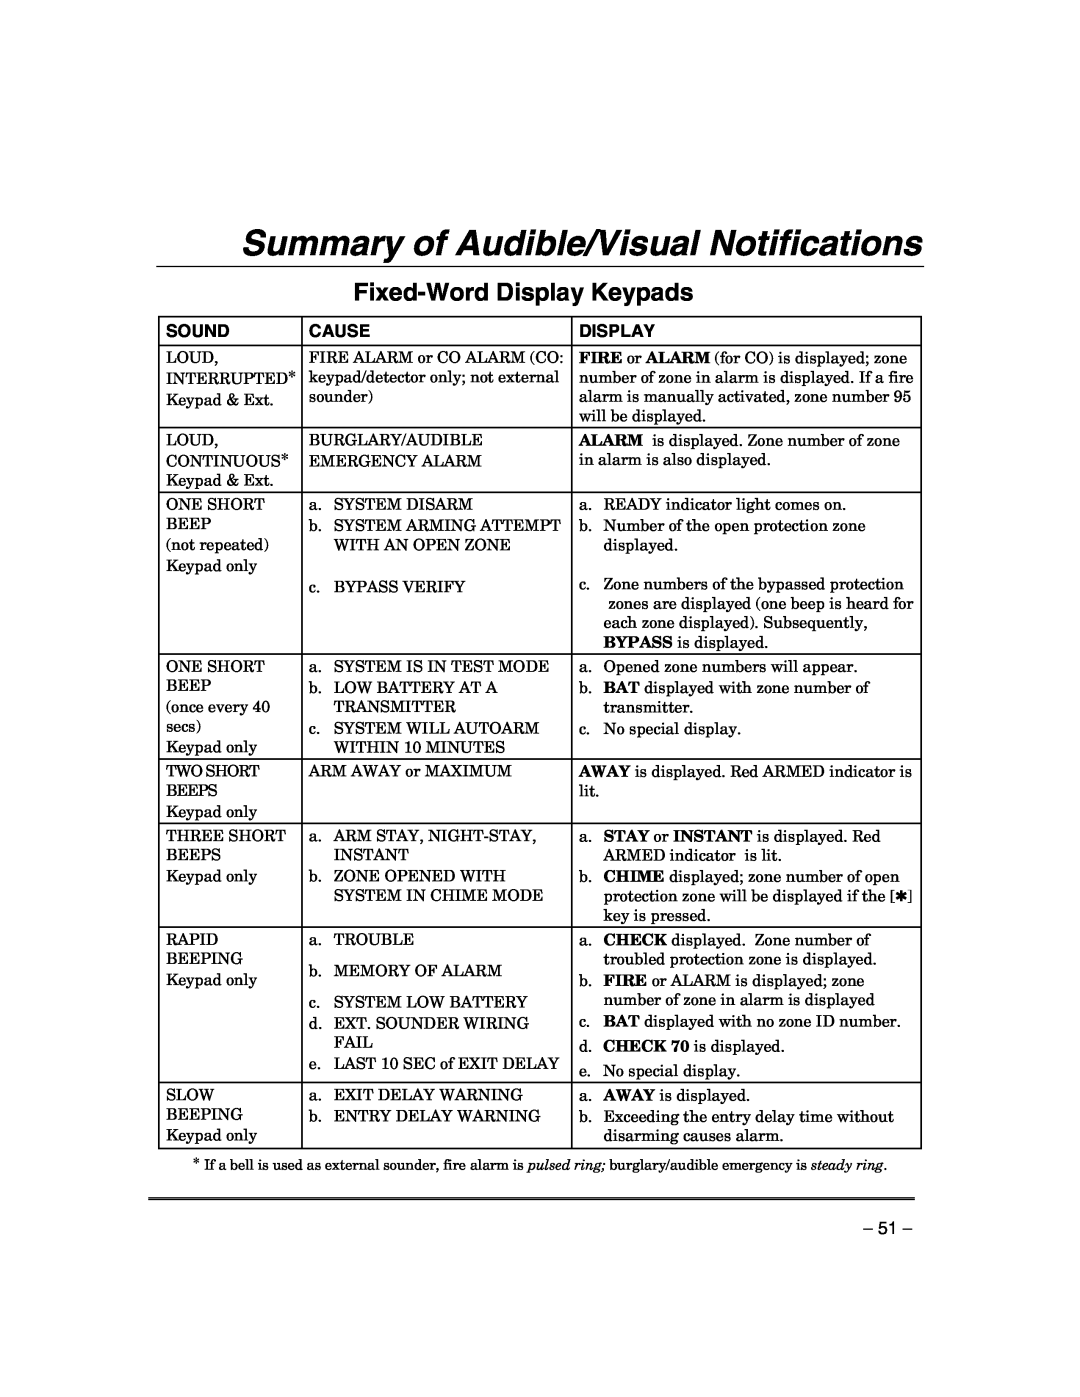 Honeywell VISTA-21IPSIA manual Summary of Audible/Visual Notifications, Fixed-WordDisplay Keypads 